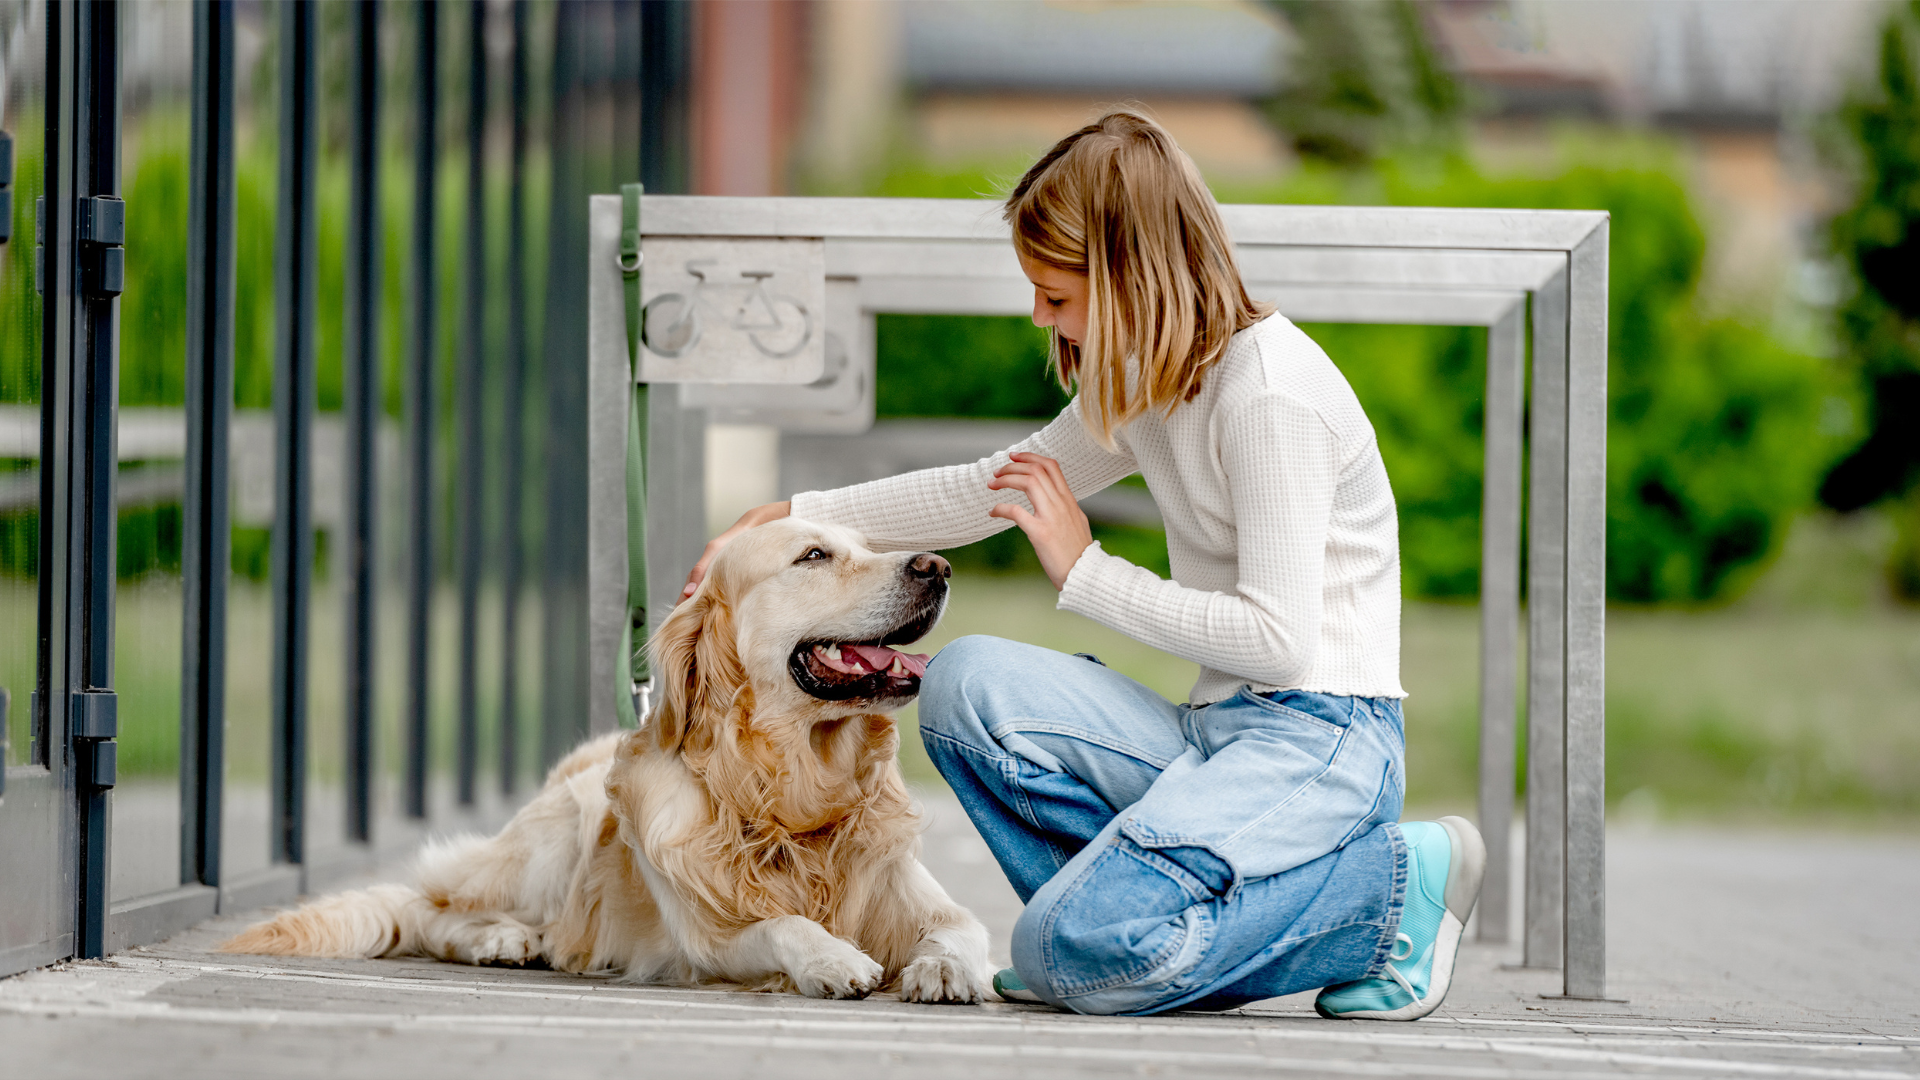 Teaching Responsibility Through Dog Care Tasks